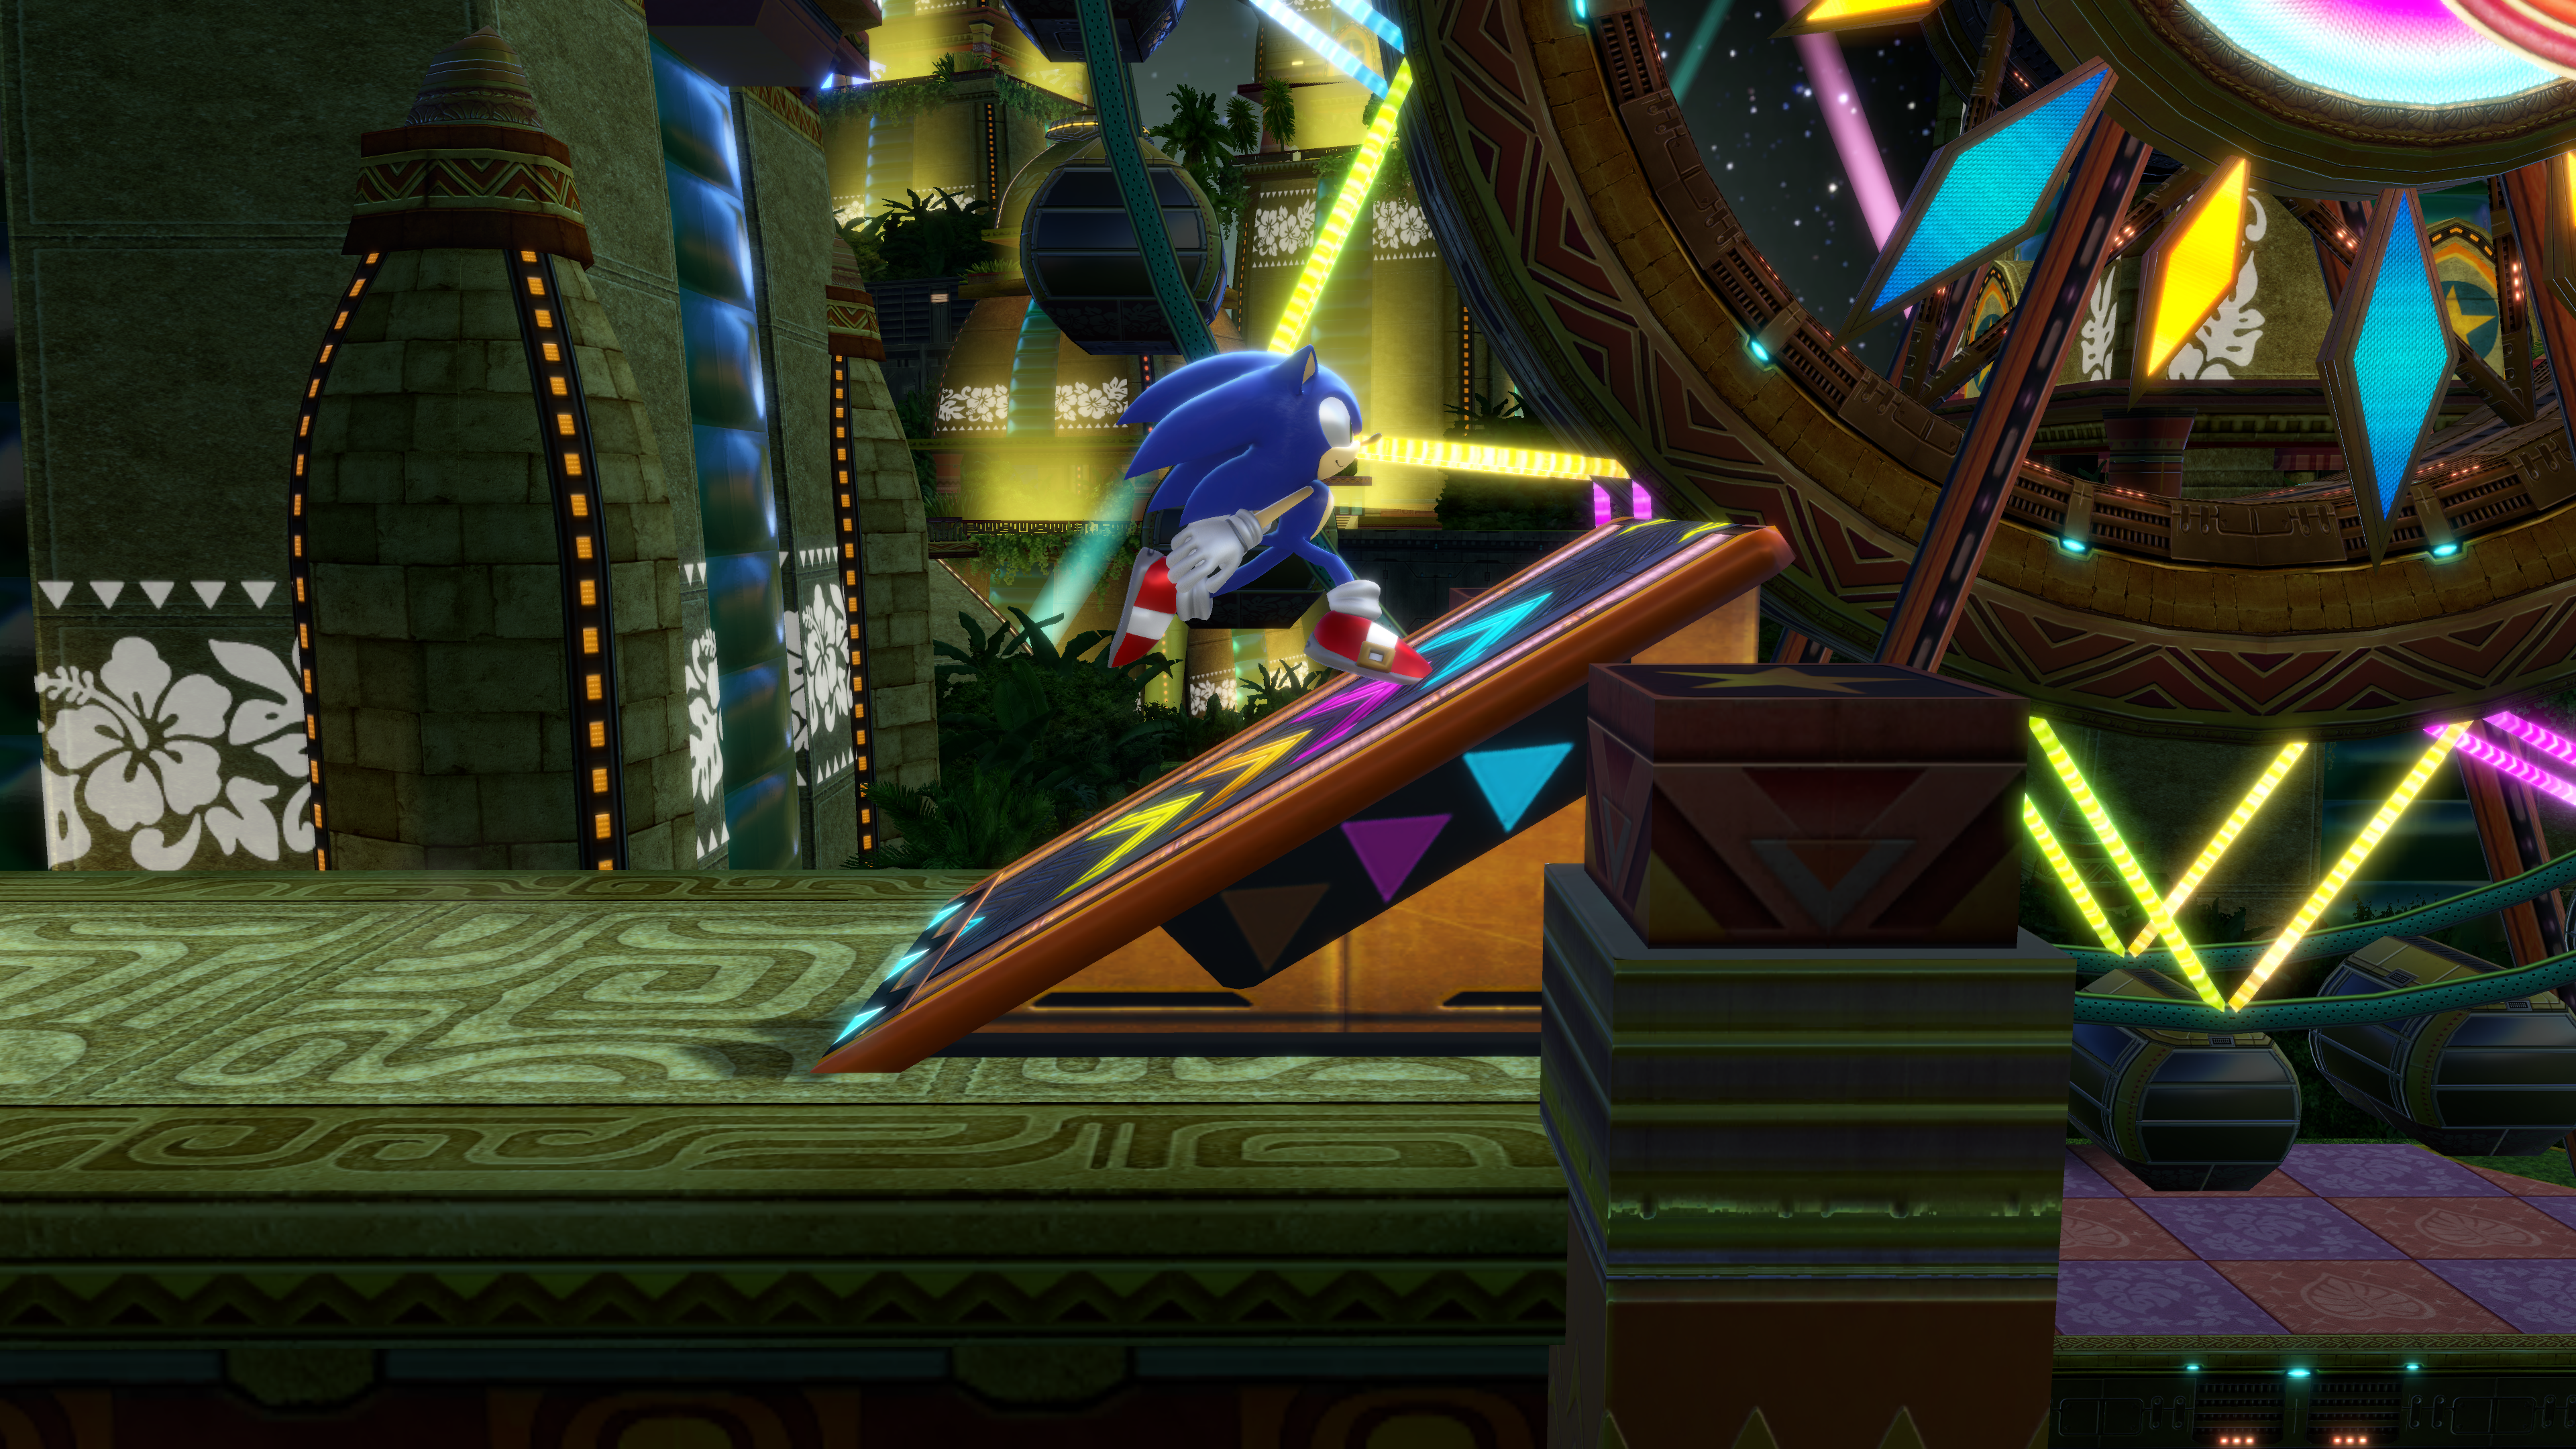 Sonic Colors - Metacritic